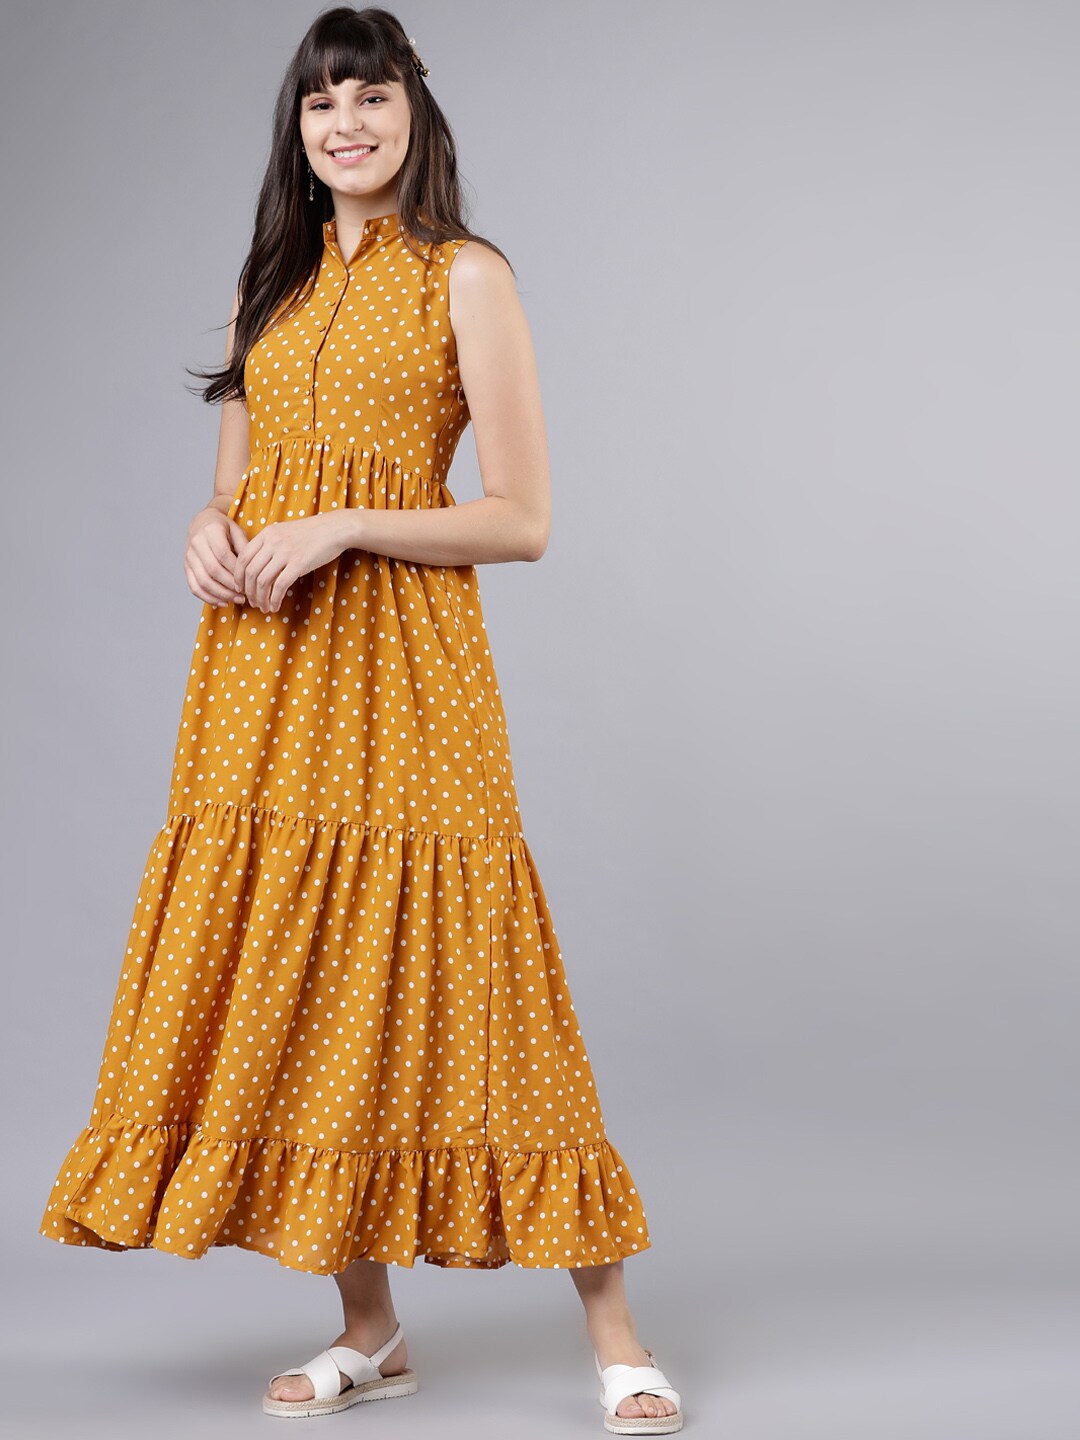 mustard and white polka dot dress